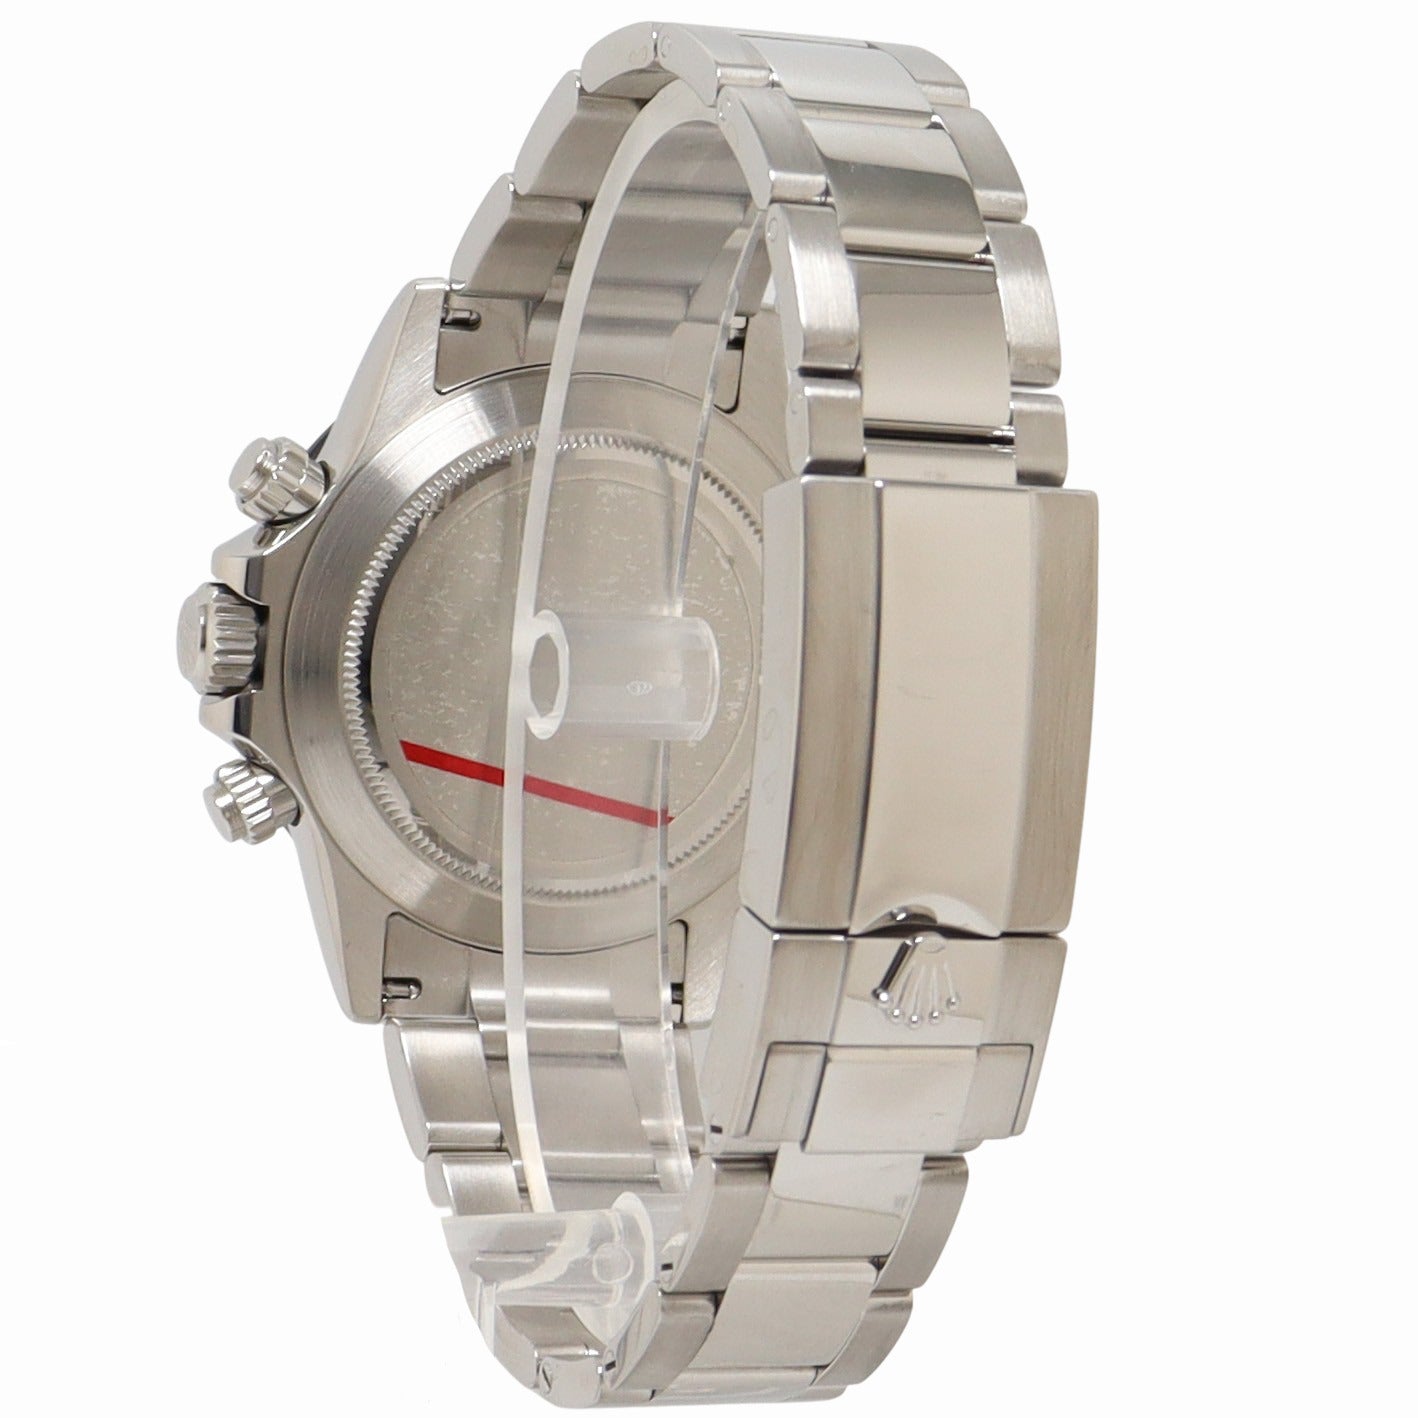 Rolex Daytona Stainless Steel 40mm Black Chronograph Dial Watch Reference# 116500LN - Happy Jewelers Fine Jewelry Lifetime Warranty